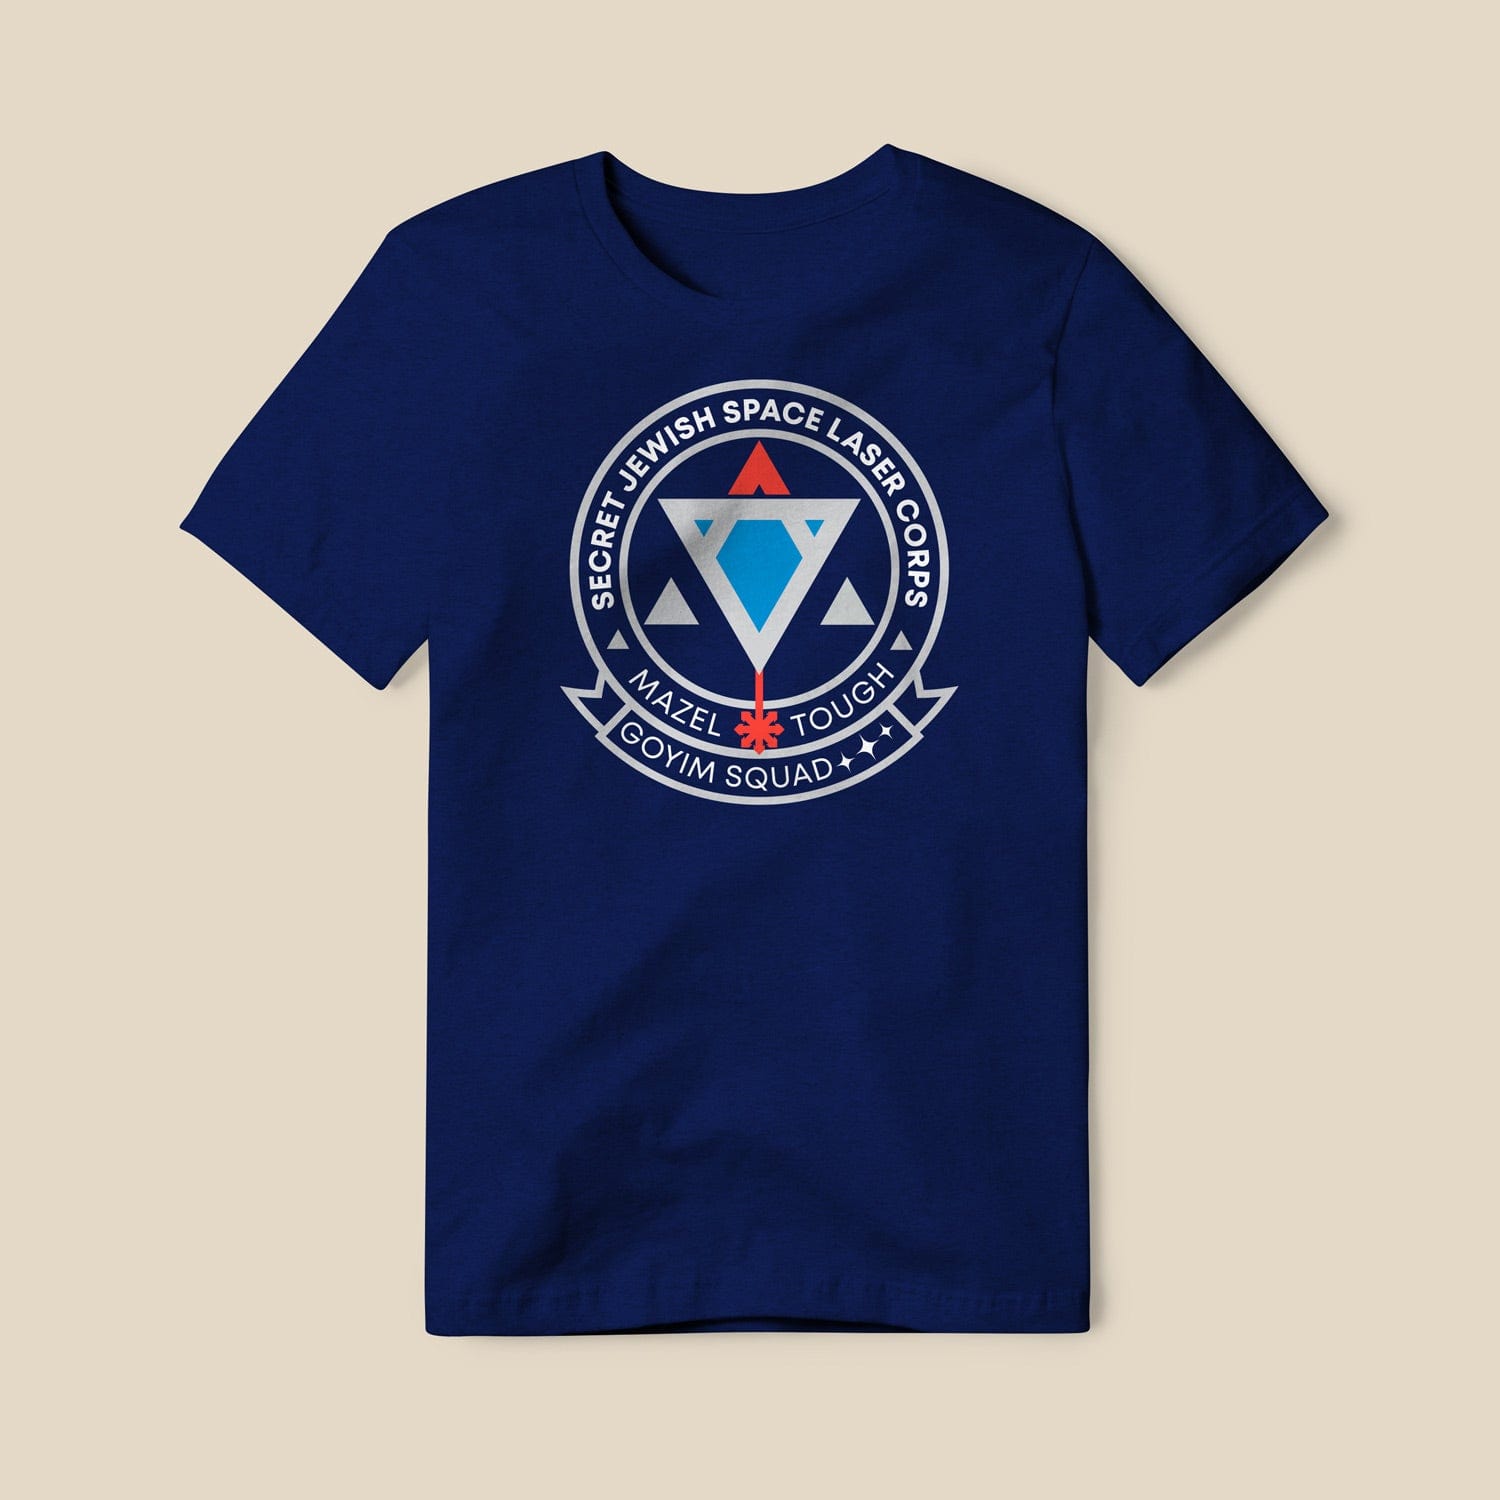 Goyim Squad / Secret Jewish Space Laser Corps T-shirt